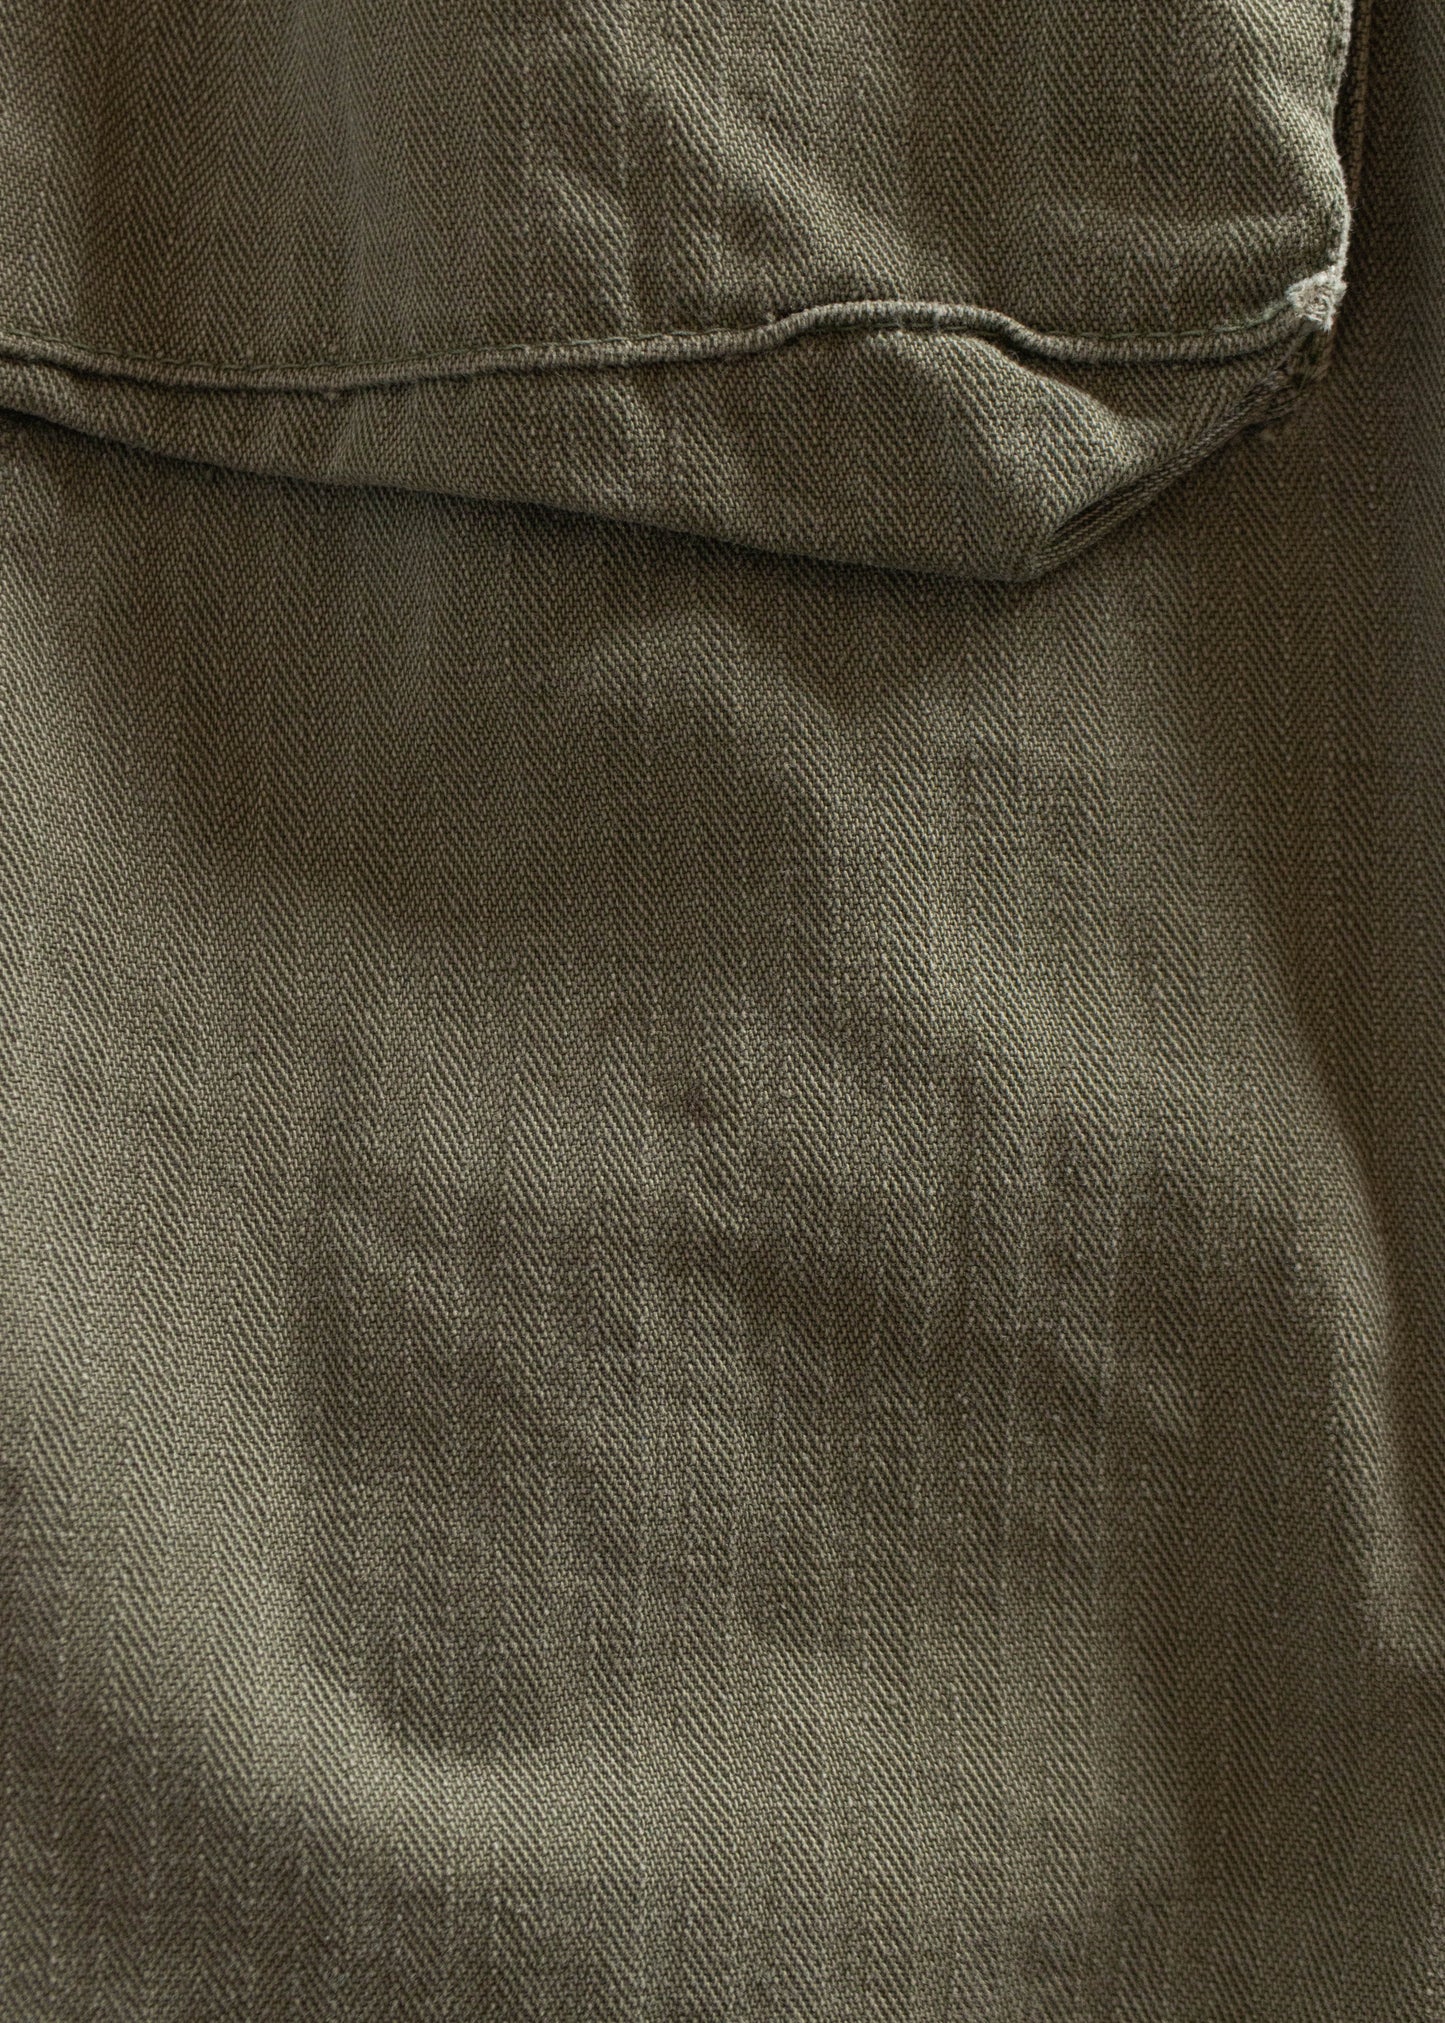 Vintage 1940s WWII Herringbone Twill 13 Star Fatigue Shirt Size XL/2XL